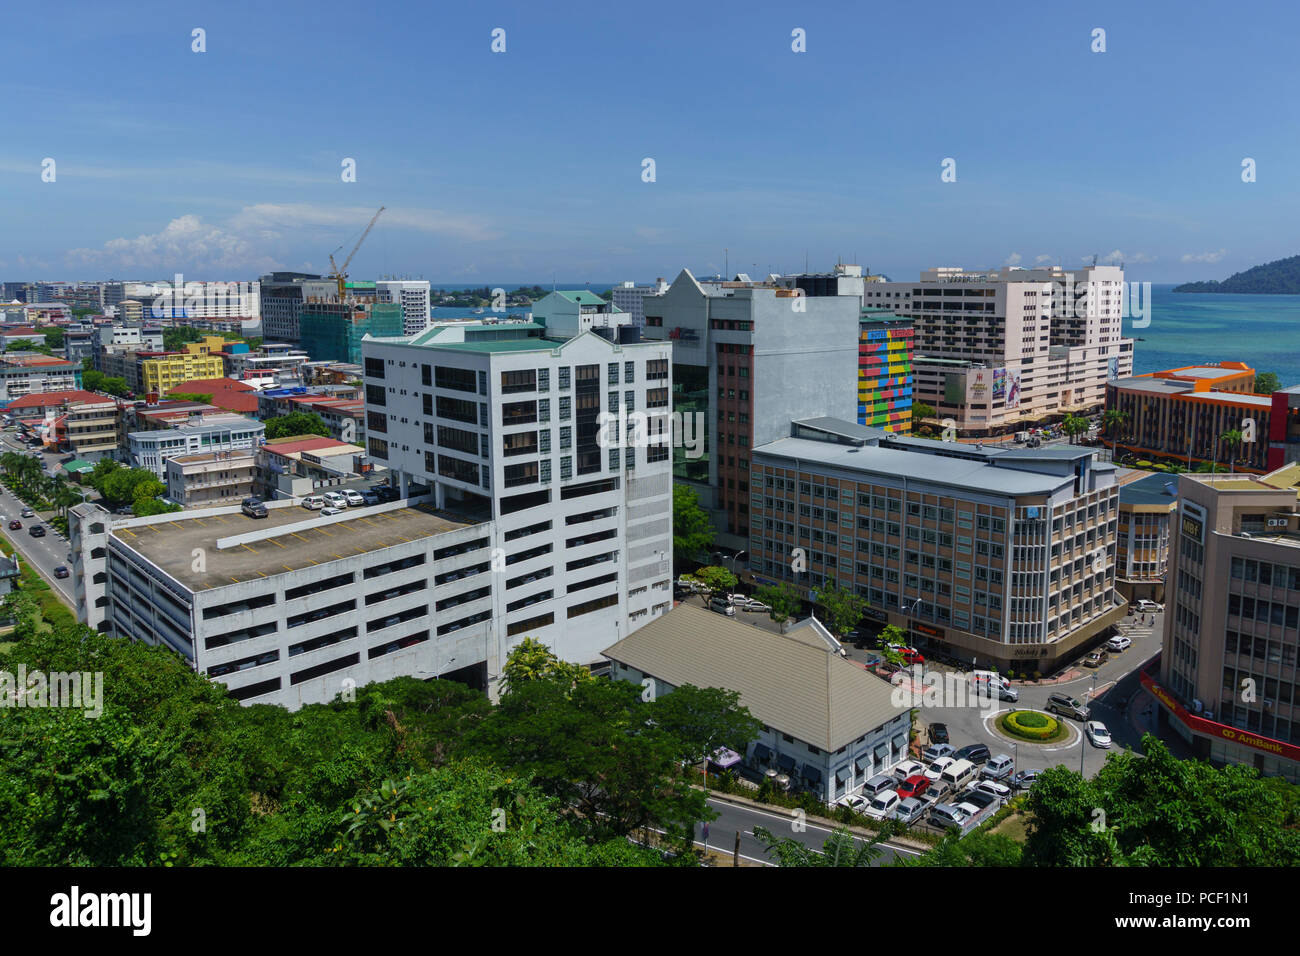 Kota Kinabalu, Sabah, Malaysia - 21. Juni 2018: Ansicht von Kota Kinabalu aus Signal Hill. KK ist die Hauptstadt von Malaysia Sabah State. Stockfoto